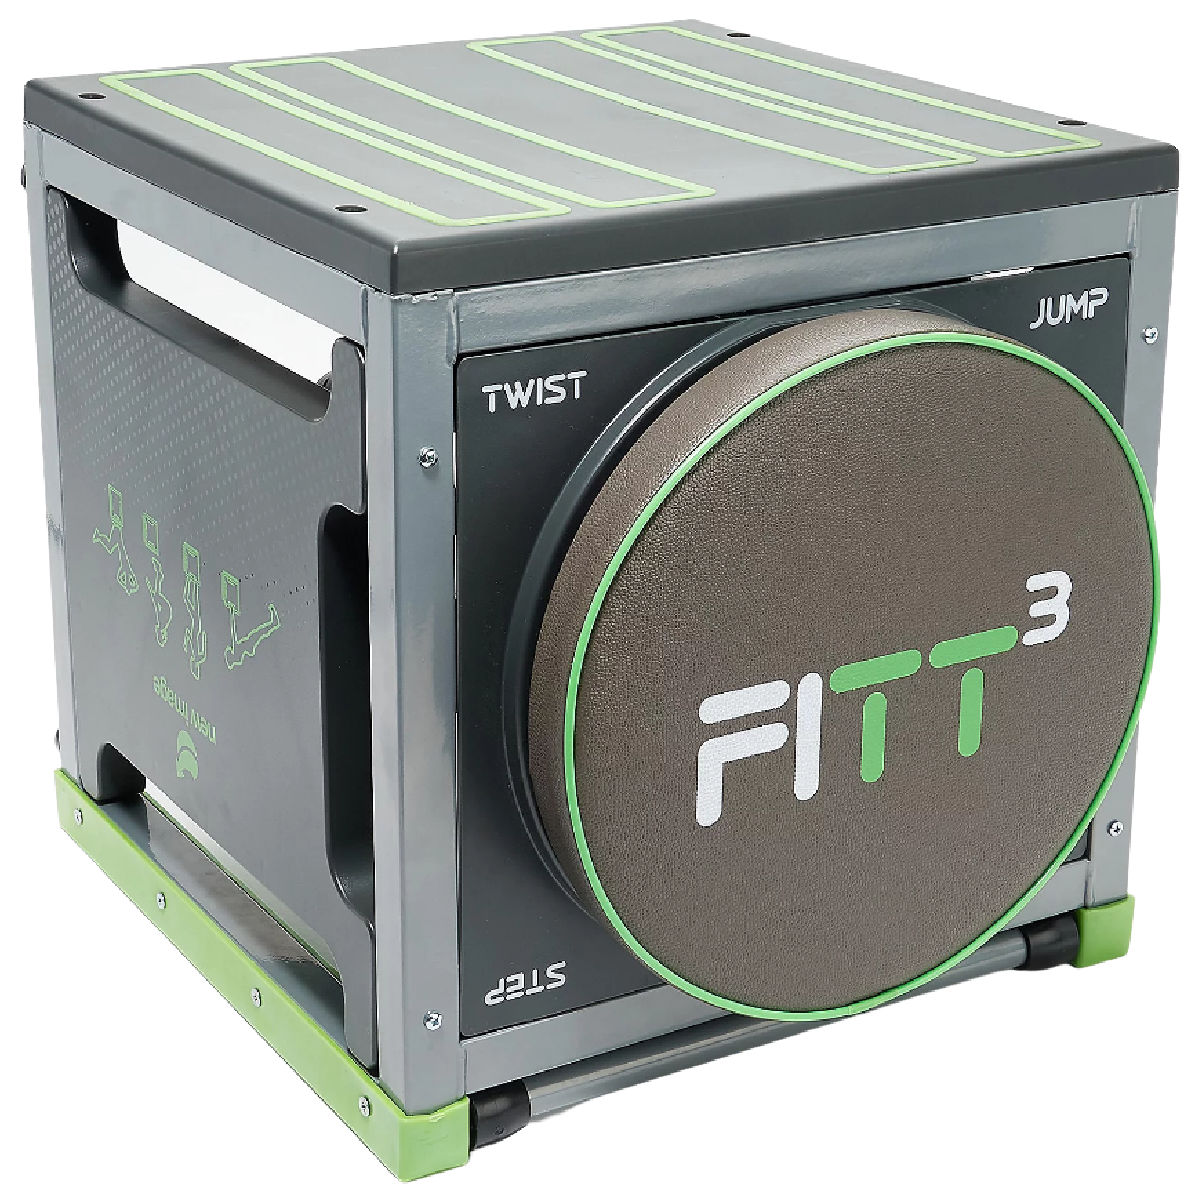 FITT CUBE Compact Multi-Gym